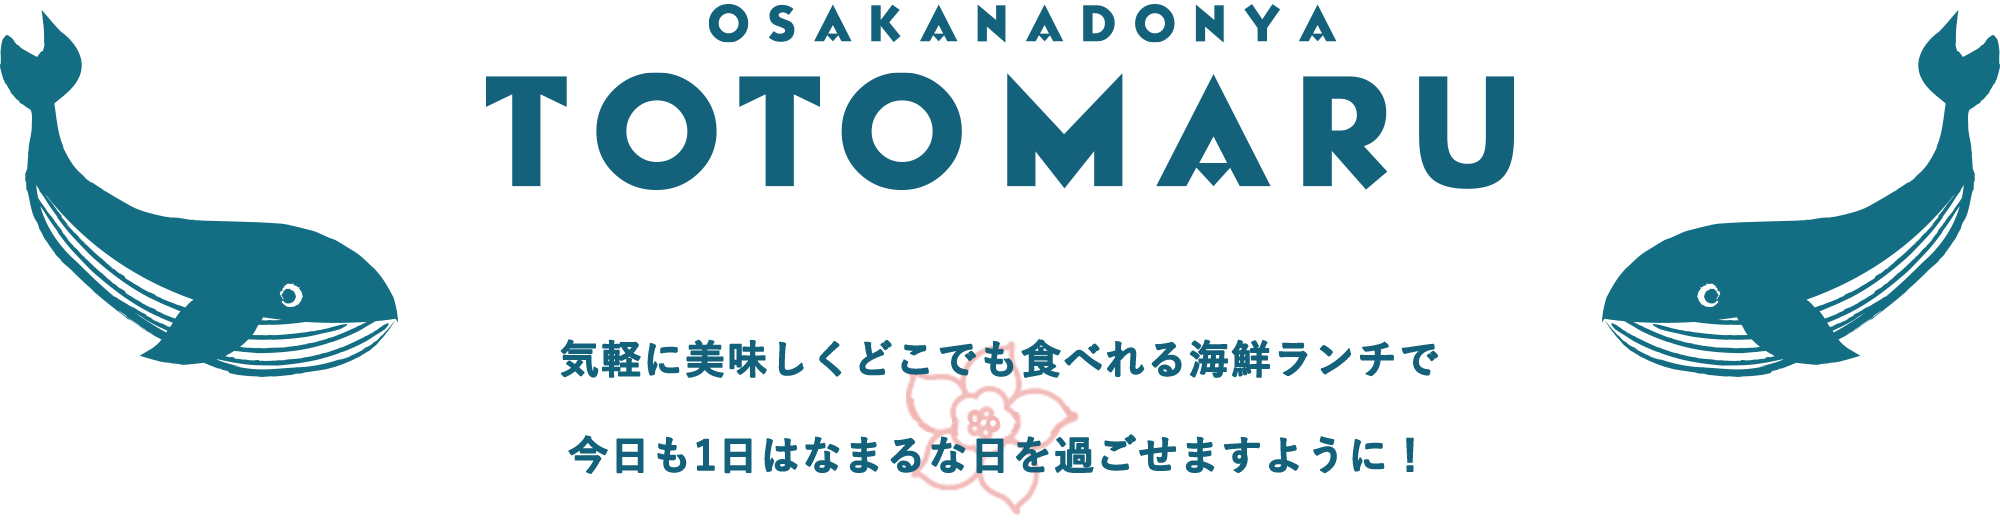 OSAKANADONYA TOTOMARU 気軽においしくどこでも食べれる海鮮ランチで今日も1日はなまるな日を過ごせますように！